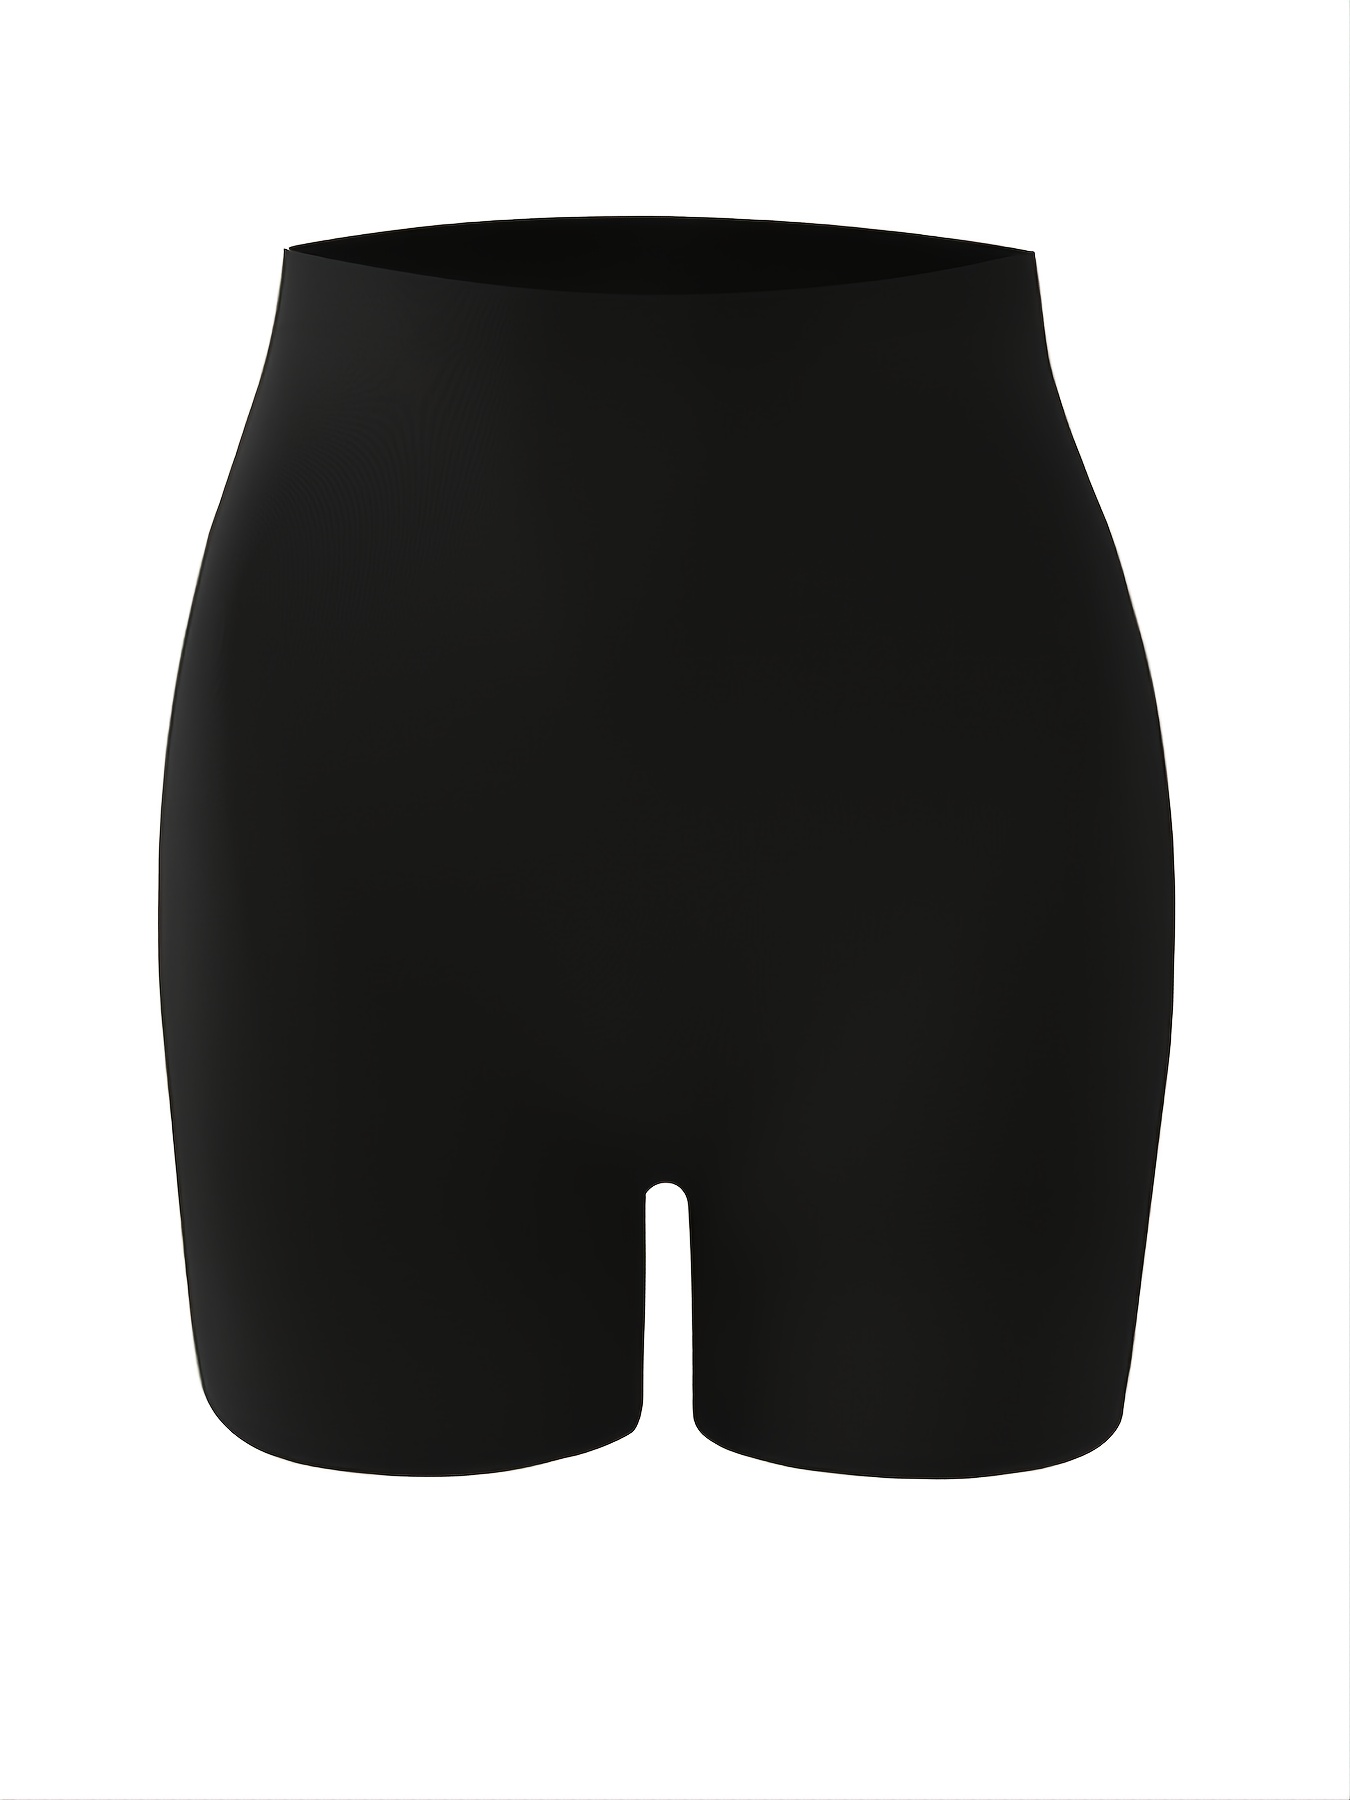 Slimming Boyshorts Underwear For Women Shapewear Shorts For Under Dresses  Tummy Control Slip Shorts Compression Panties Black XL